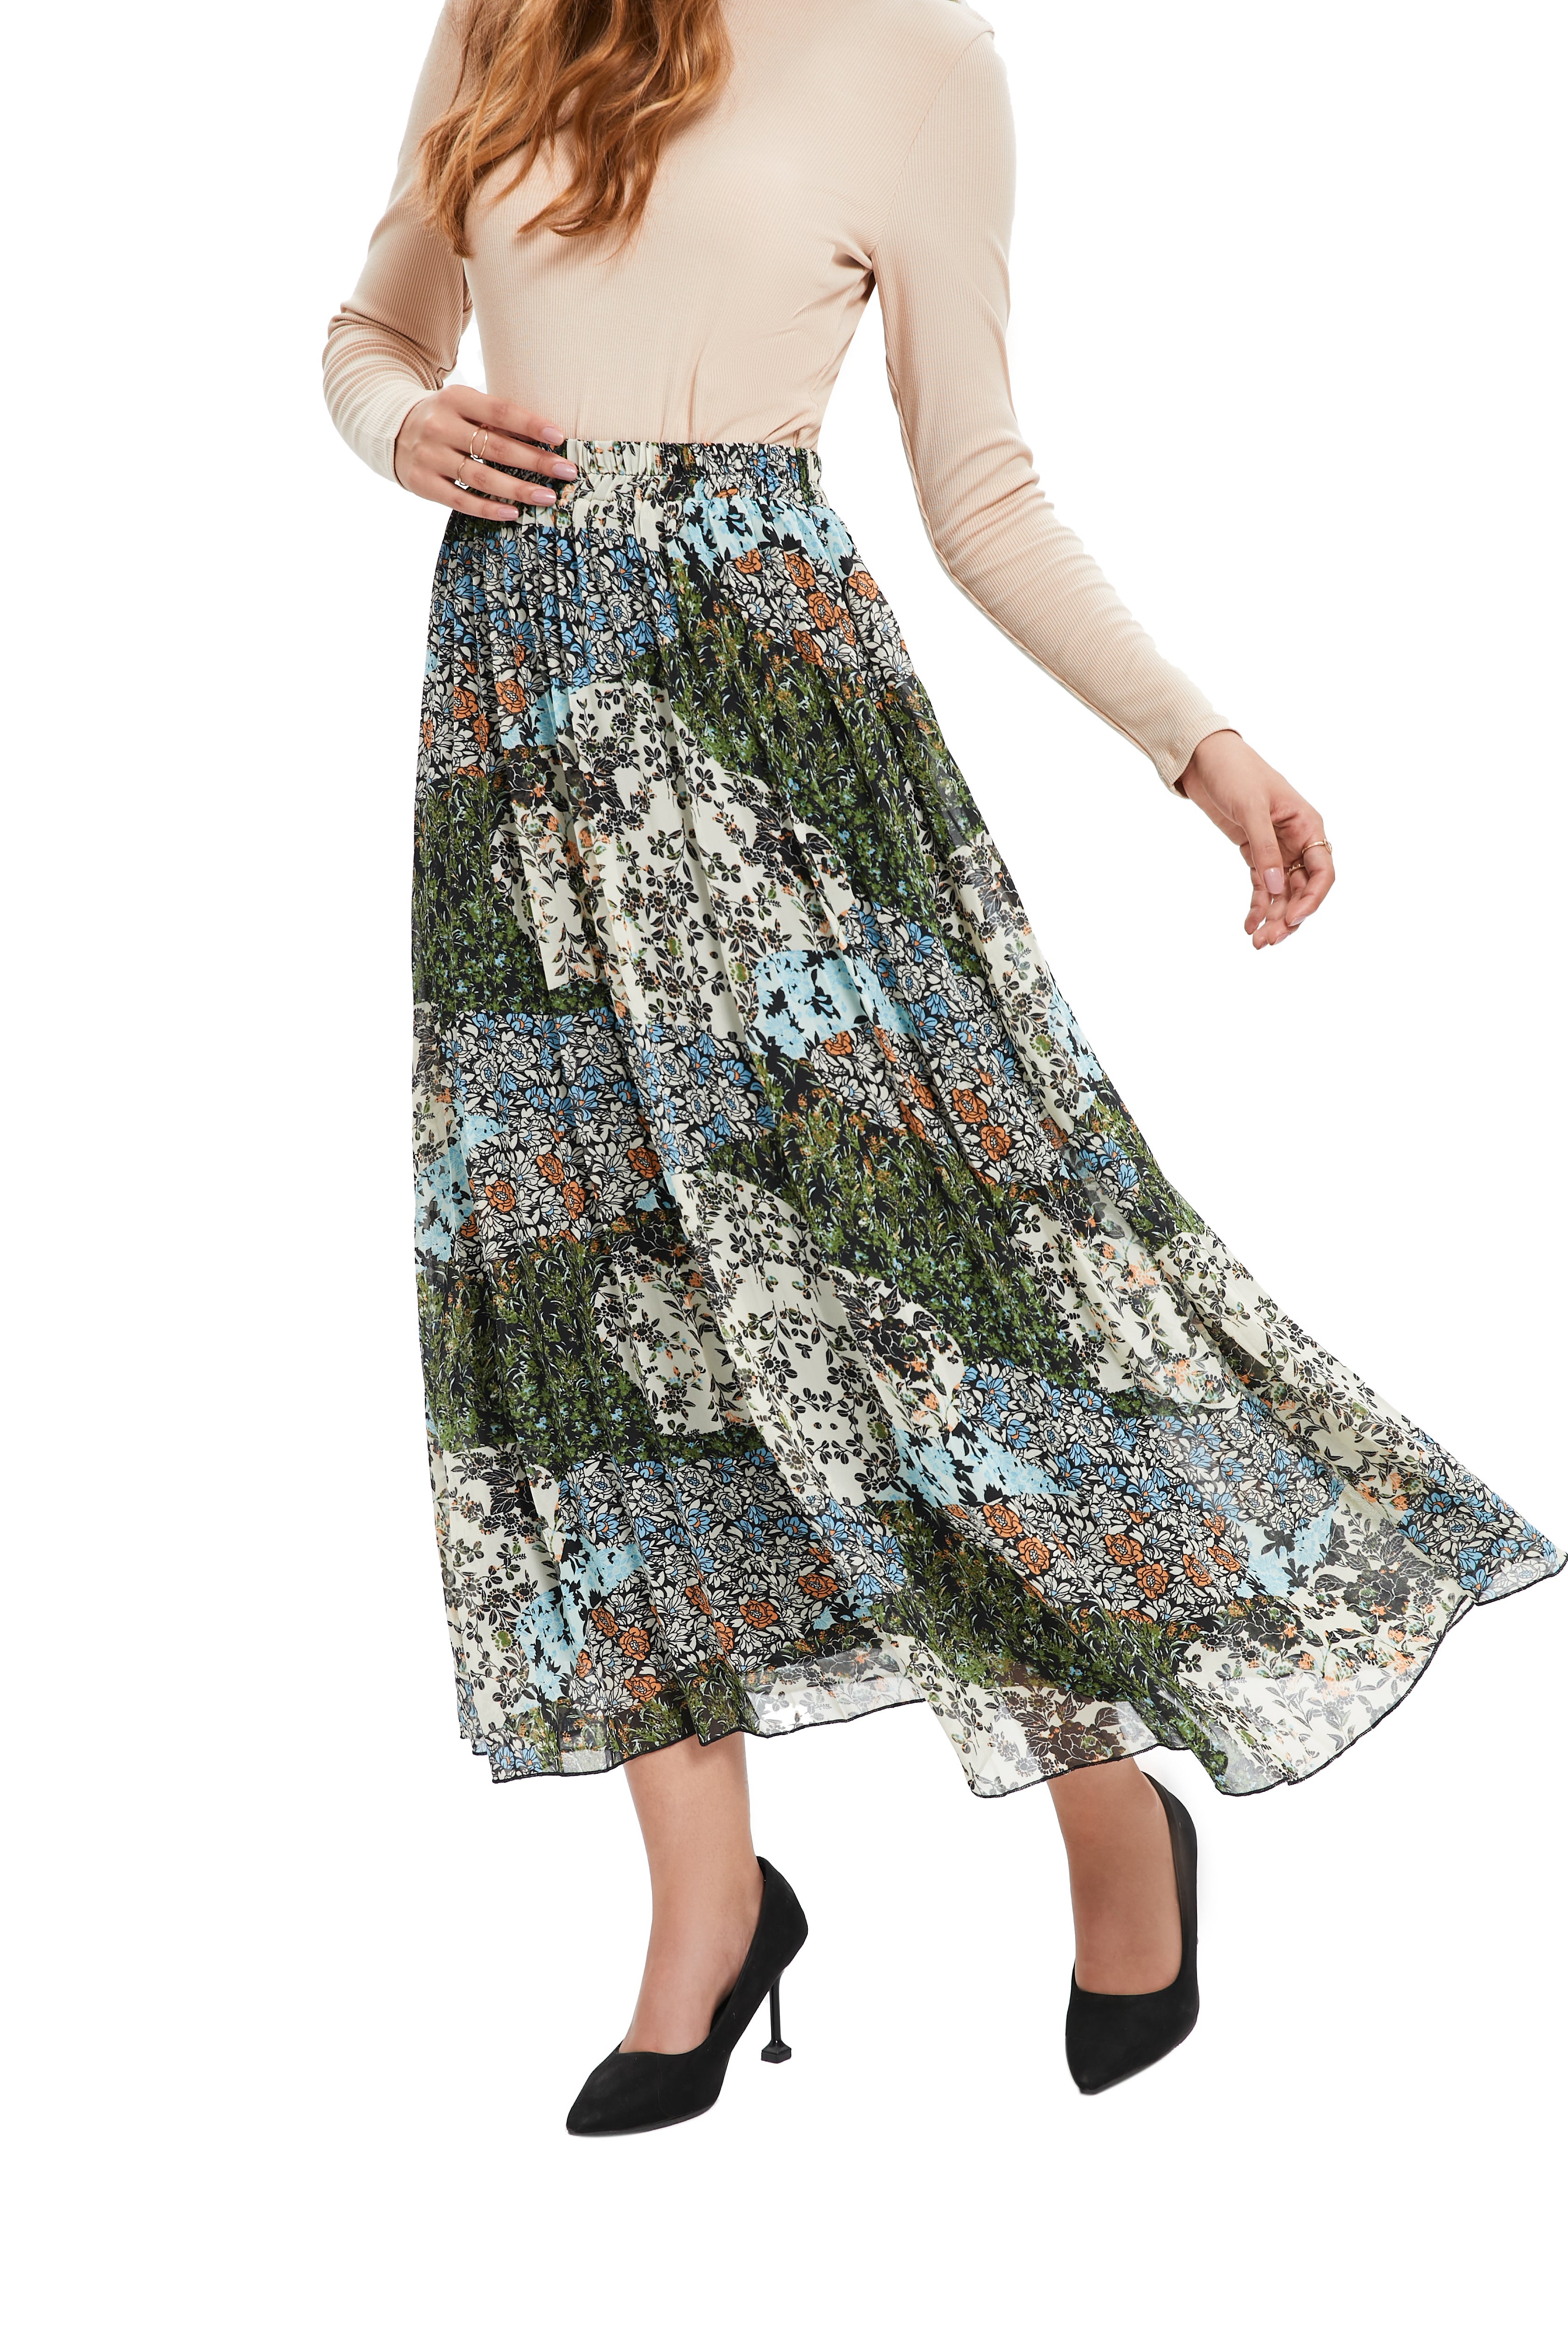 Verdant Spring A-Line Skirt